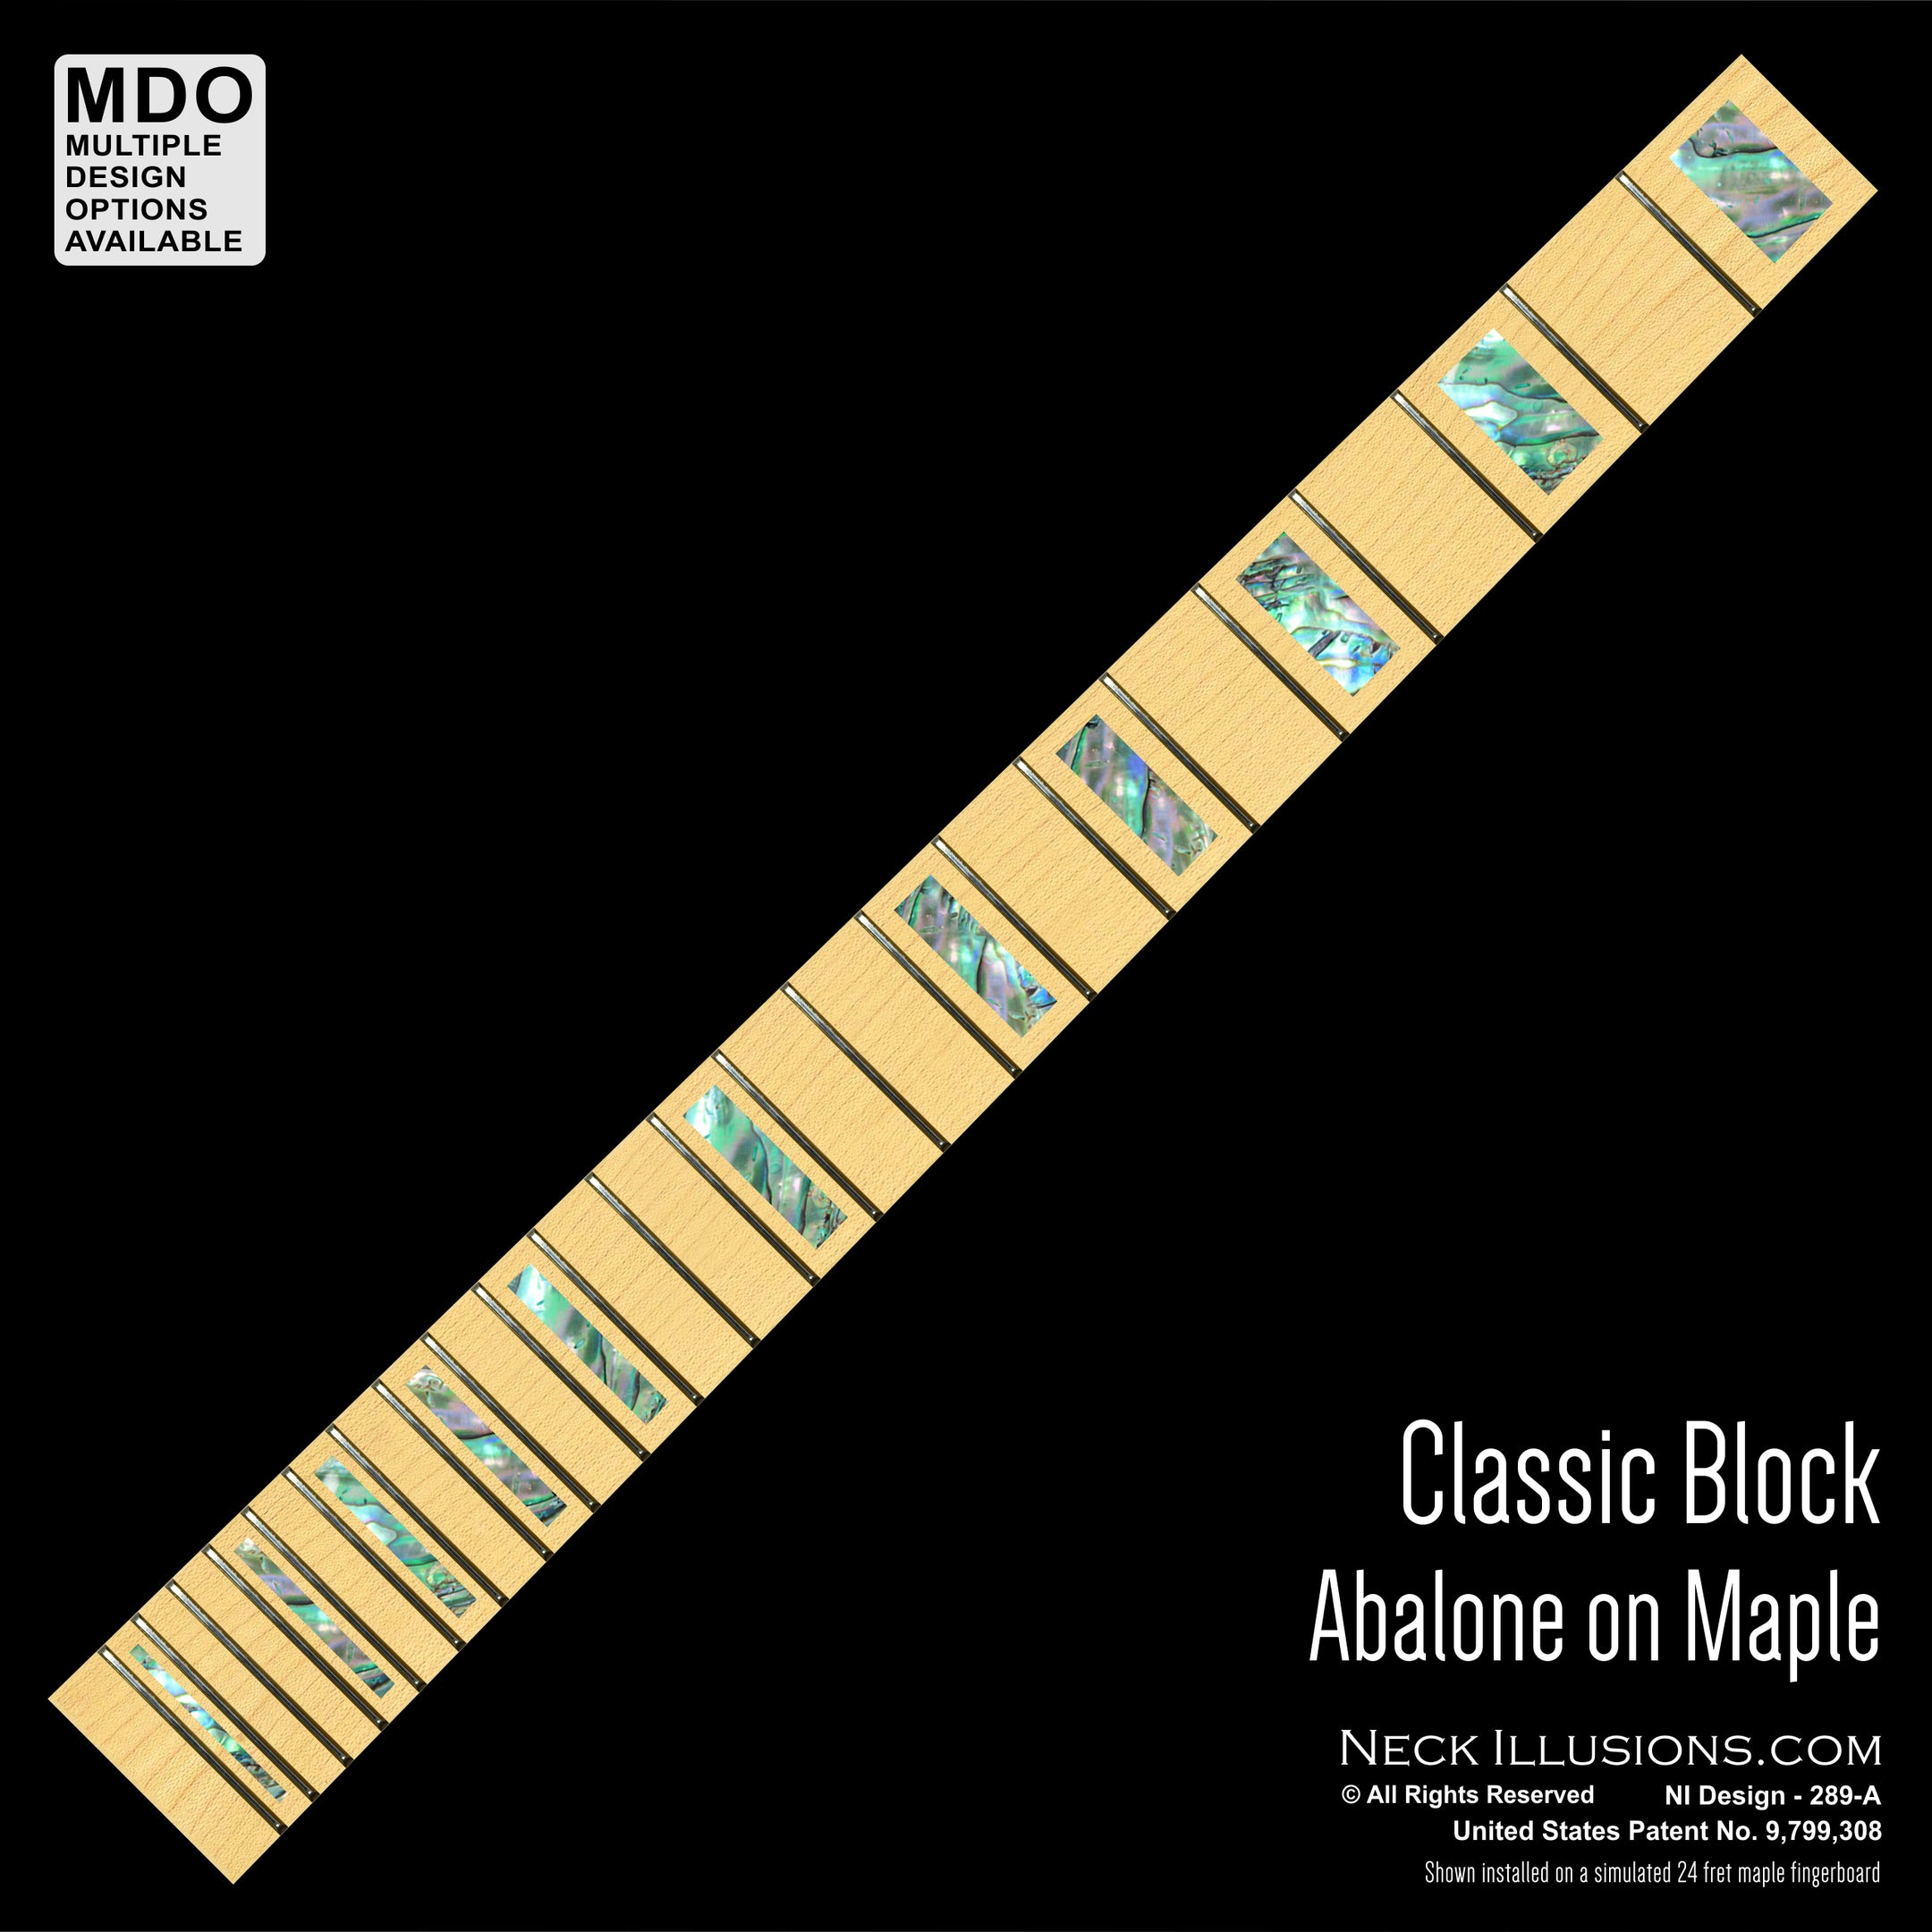 Classic Blocks on Maple